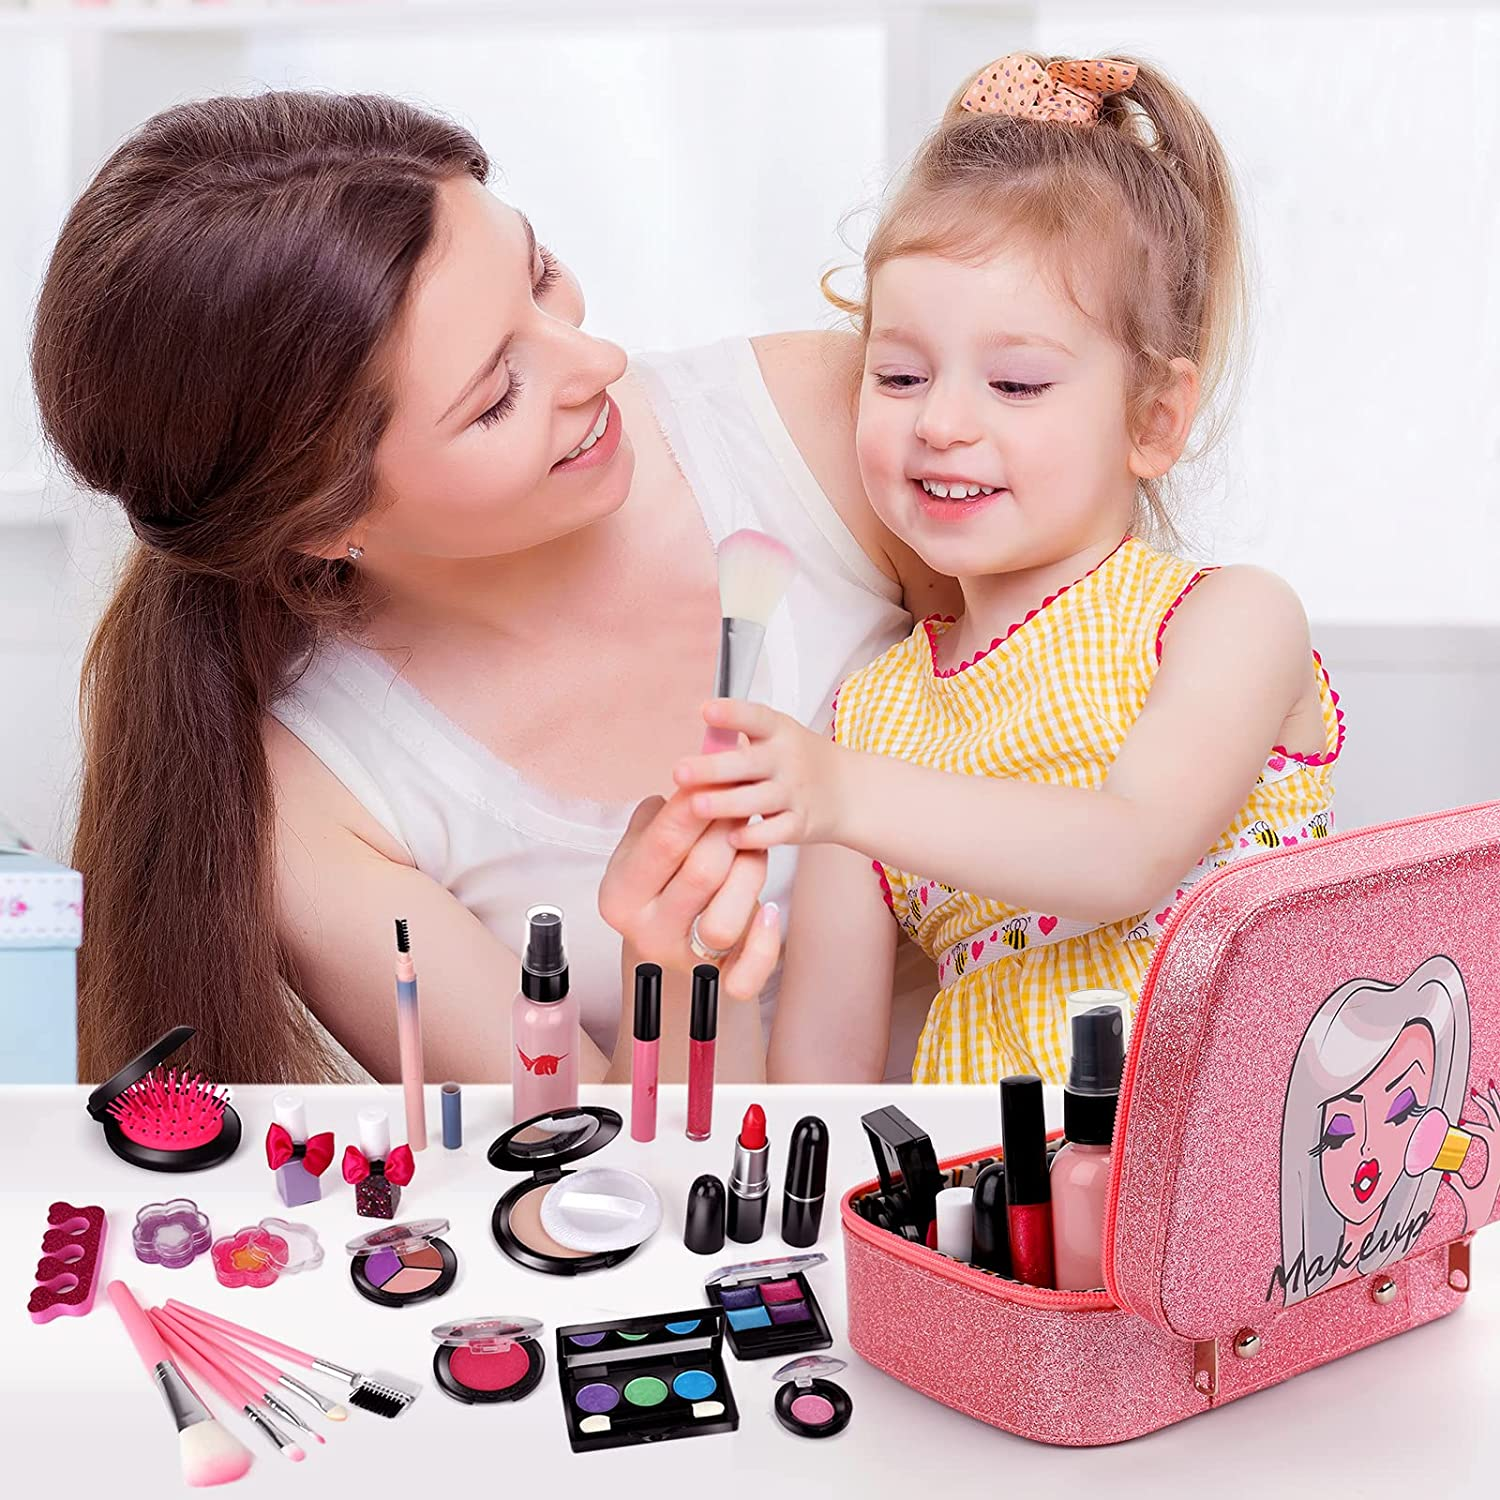 Flybay Kids Makeup Kit for Girl, Real Washable Makeup Set Girl Toys, Little  Girl